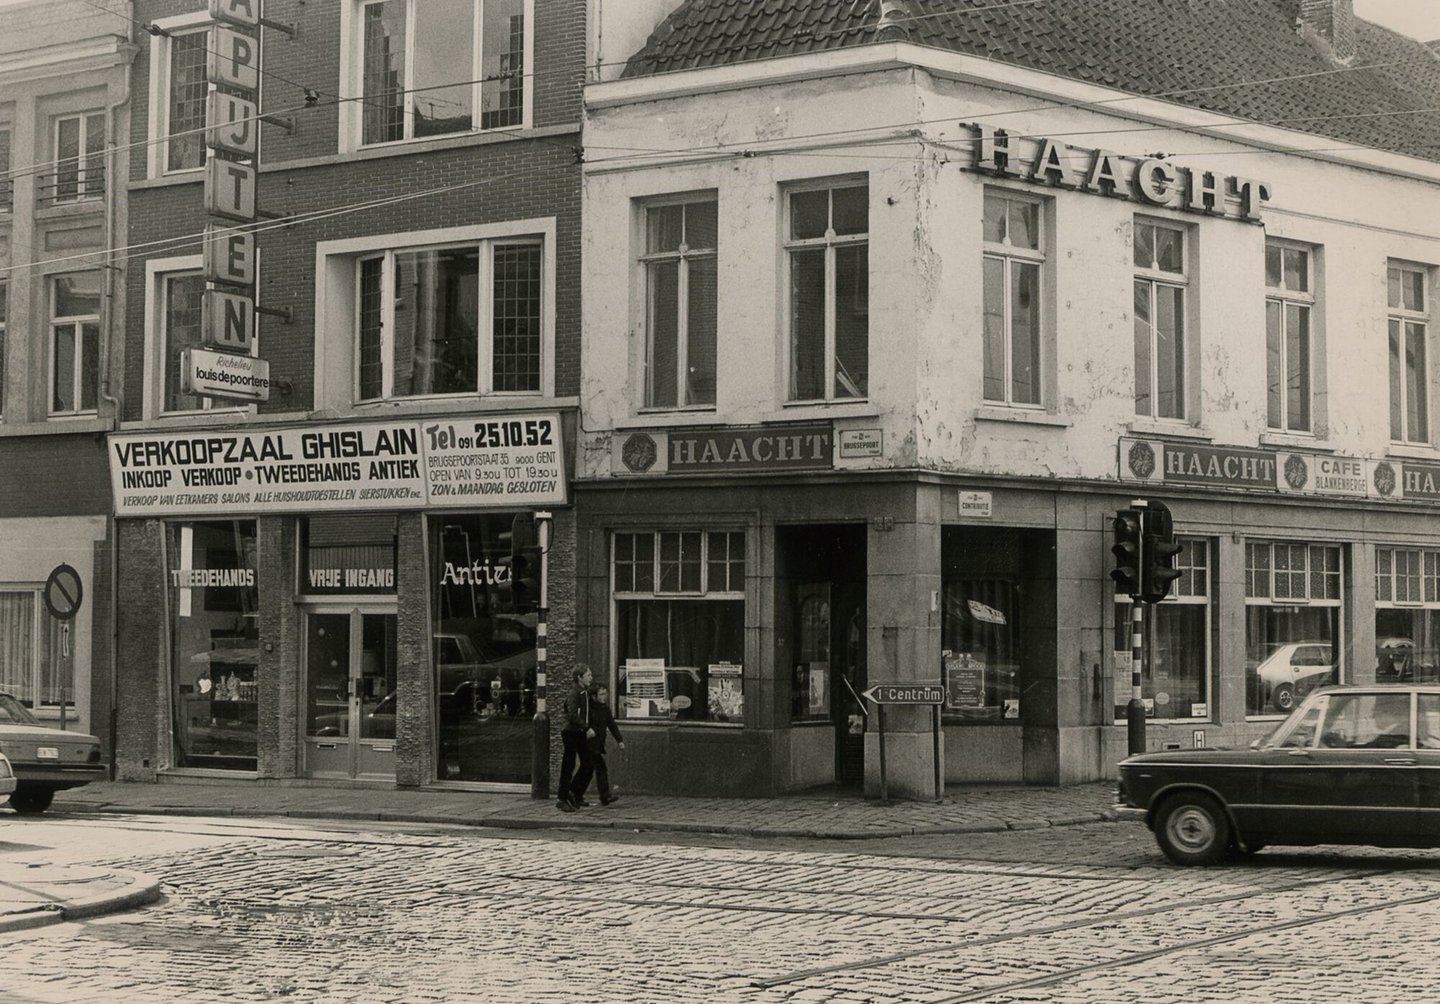 Straatbeeld met tapijtenzaak - verkoopzaal Ghislain en café Blankenberge in Gent